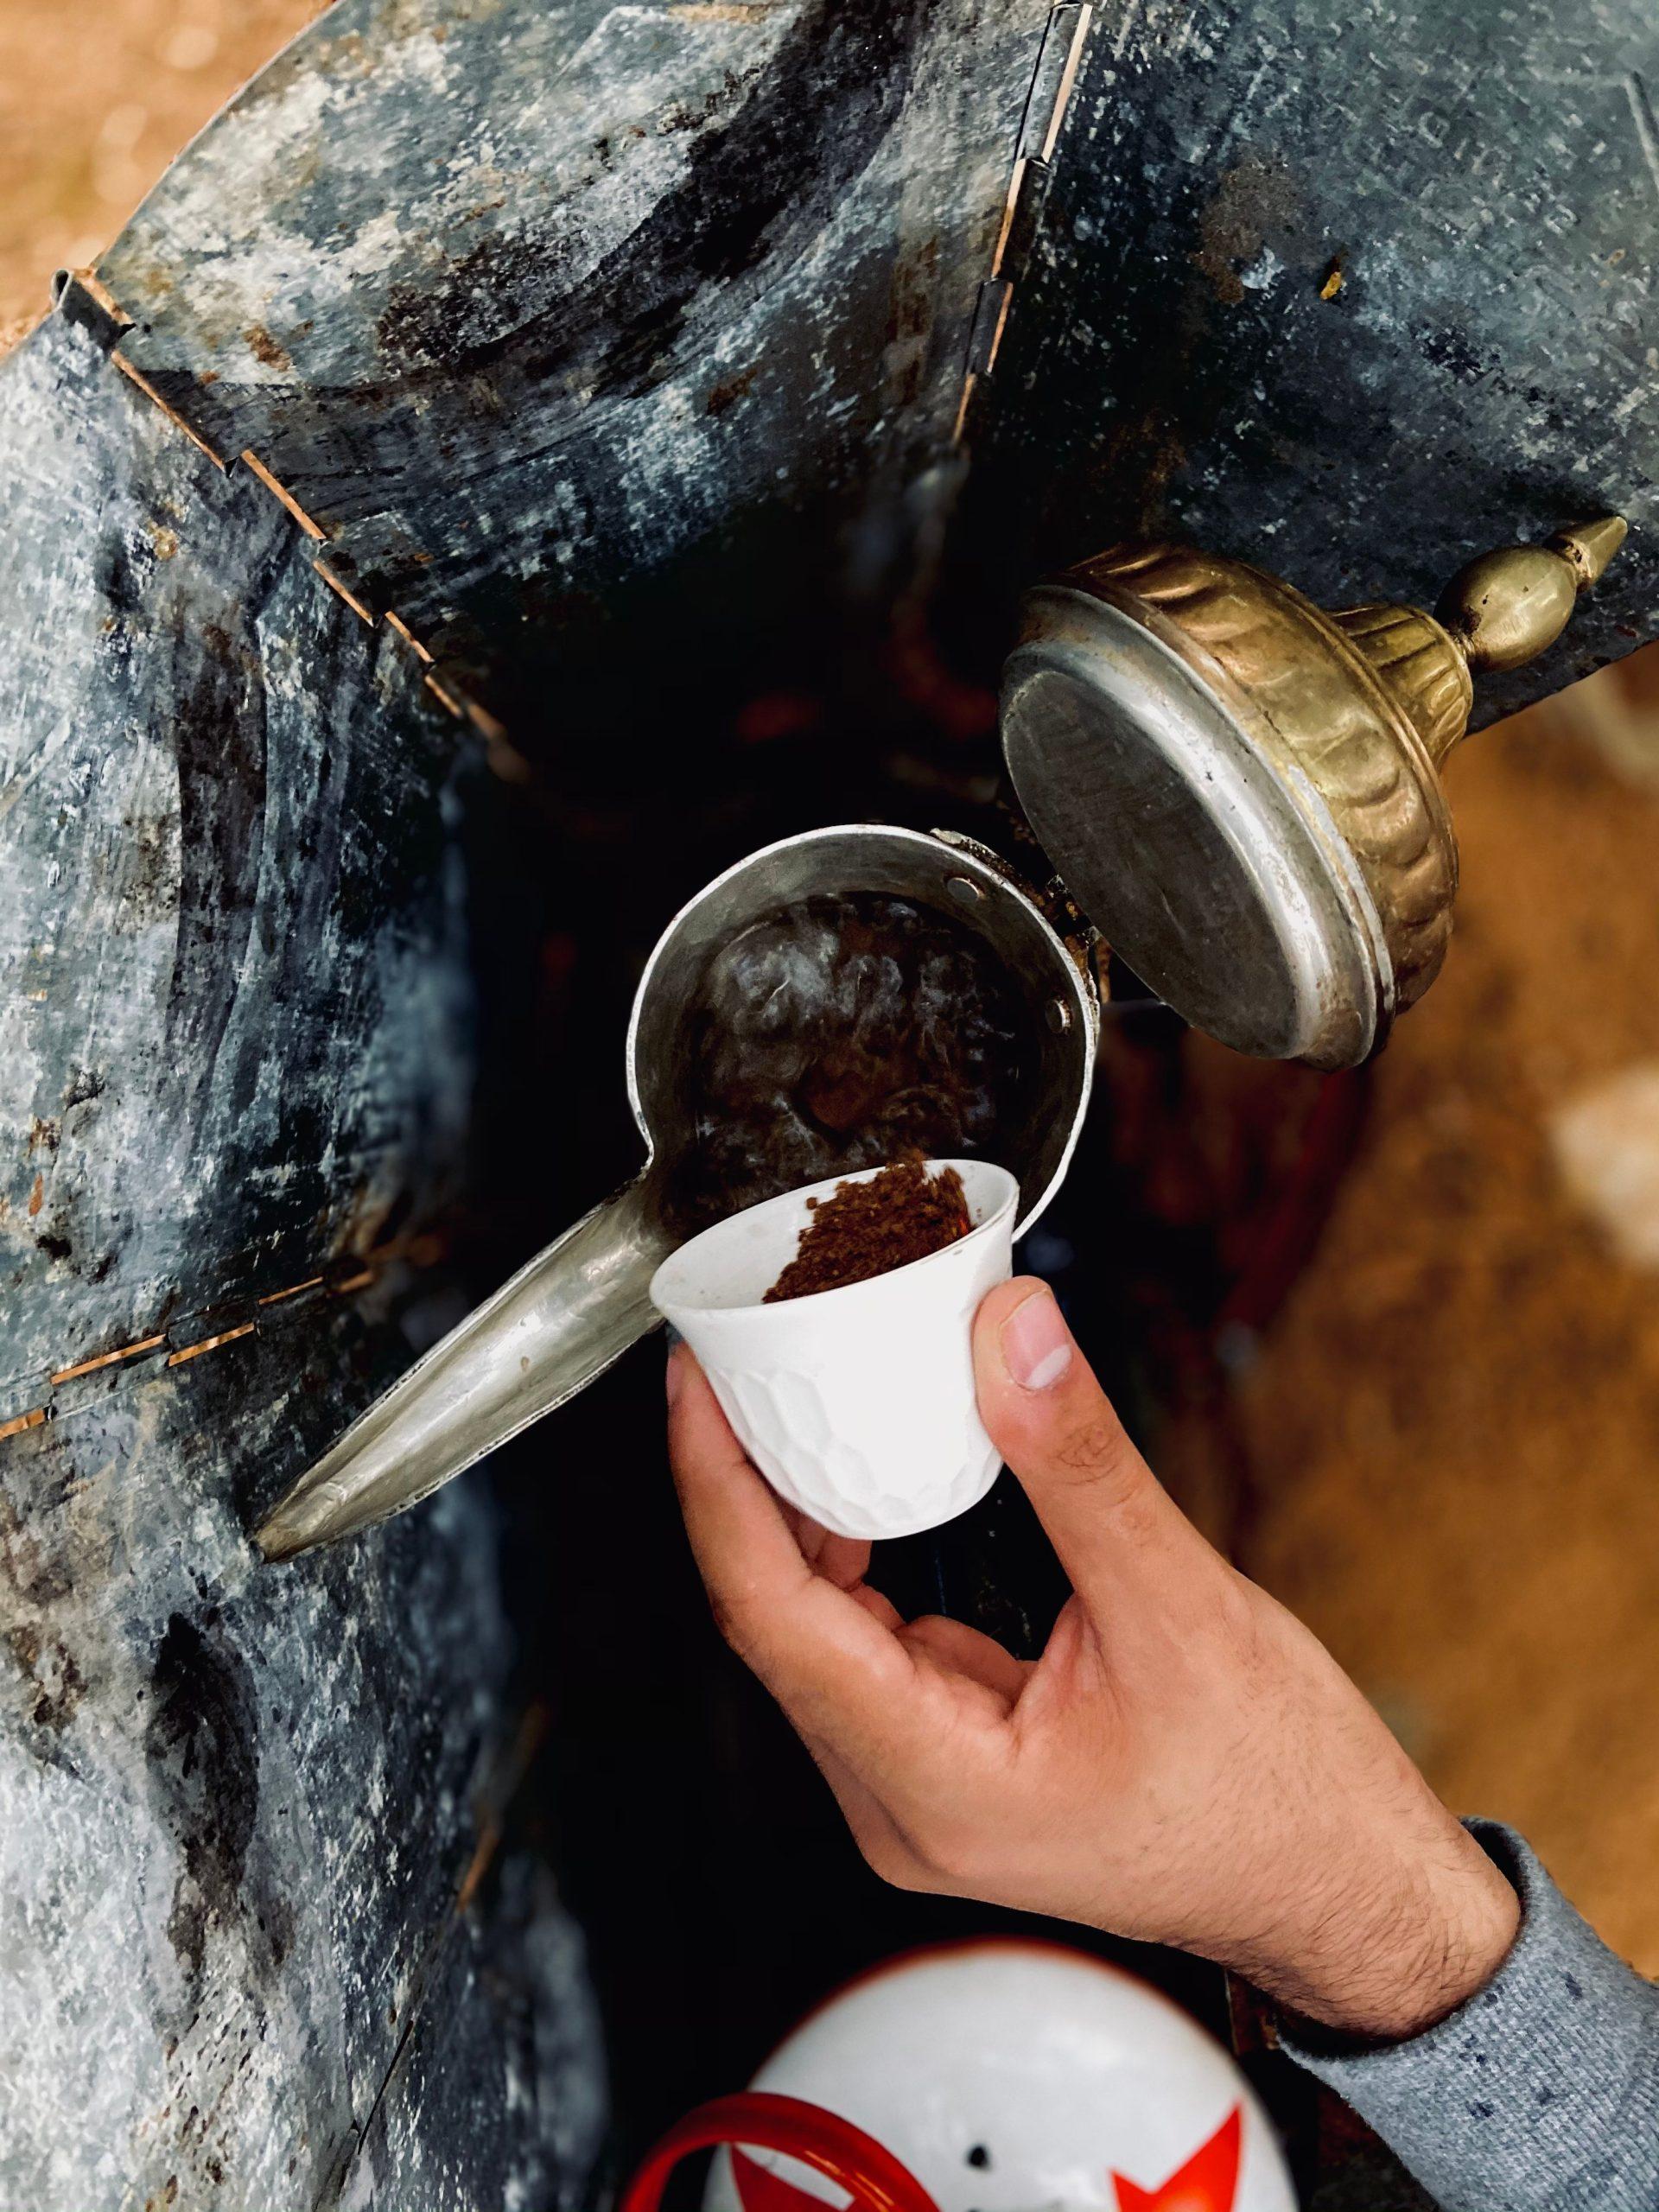 Preparing Saudi coffee, showcasing the hospitality in KSA